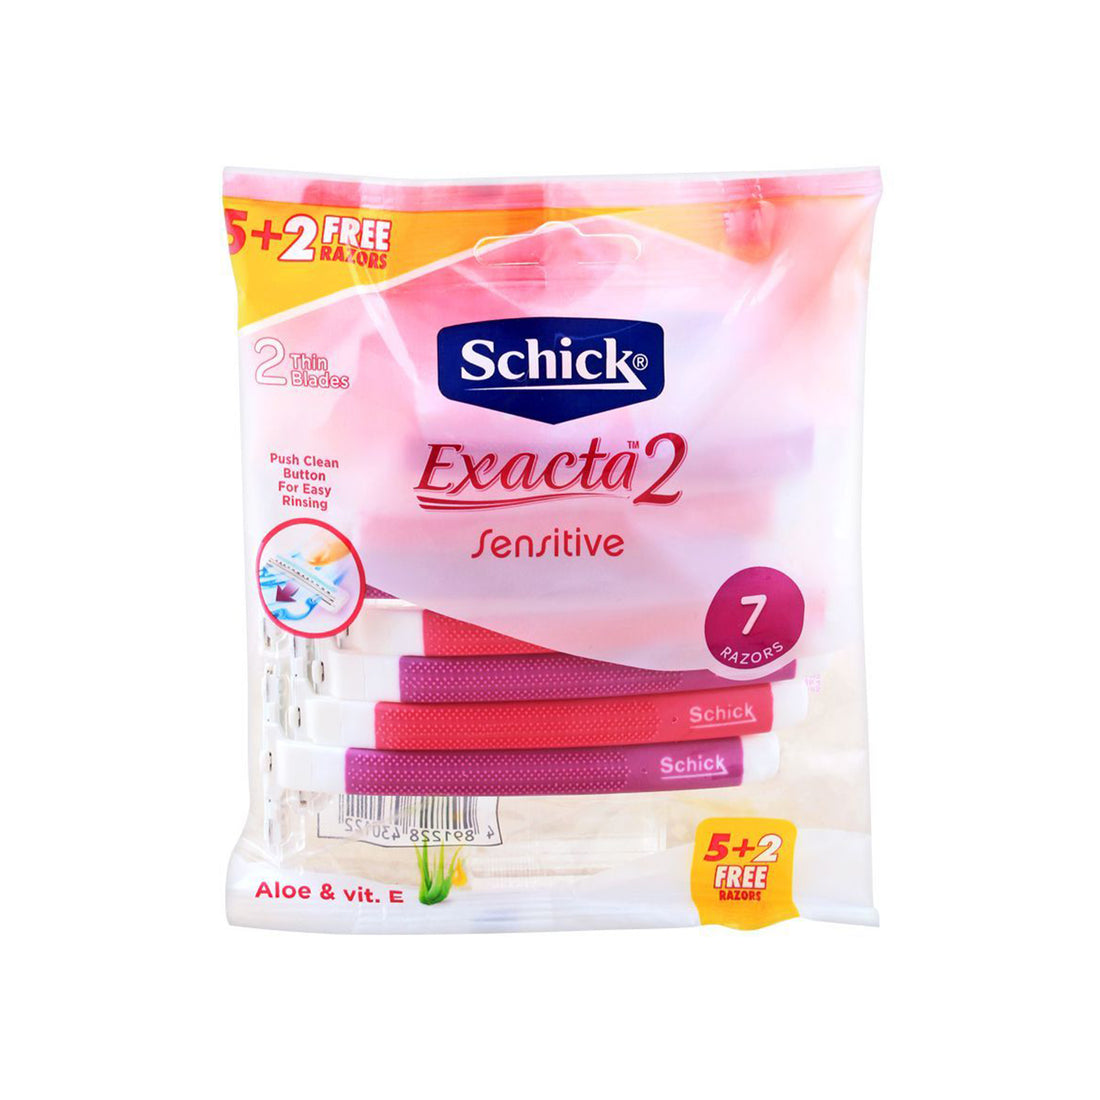 Schick Exacta 2 Sensitive Disposable Razor with Vitamin E for Women (5+2)